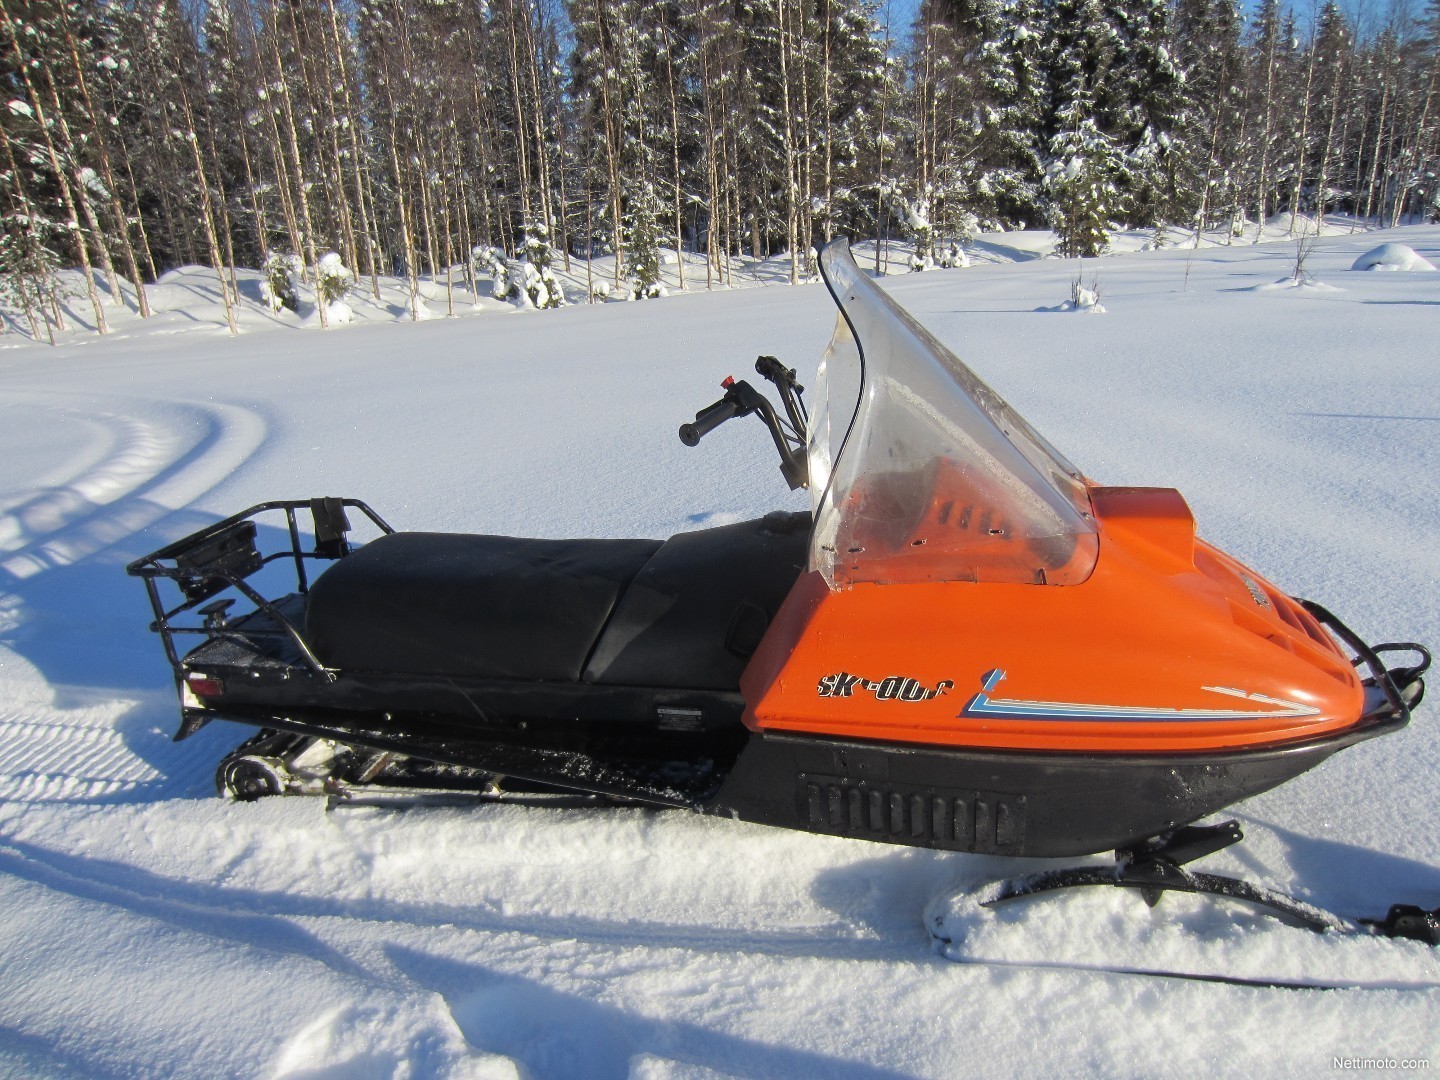 Ski-doo Tundra 250 Lt 250 Cm U00b3 1990